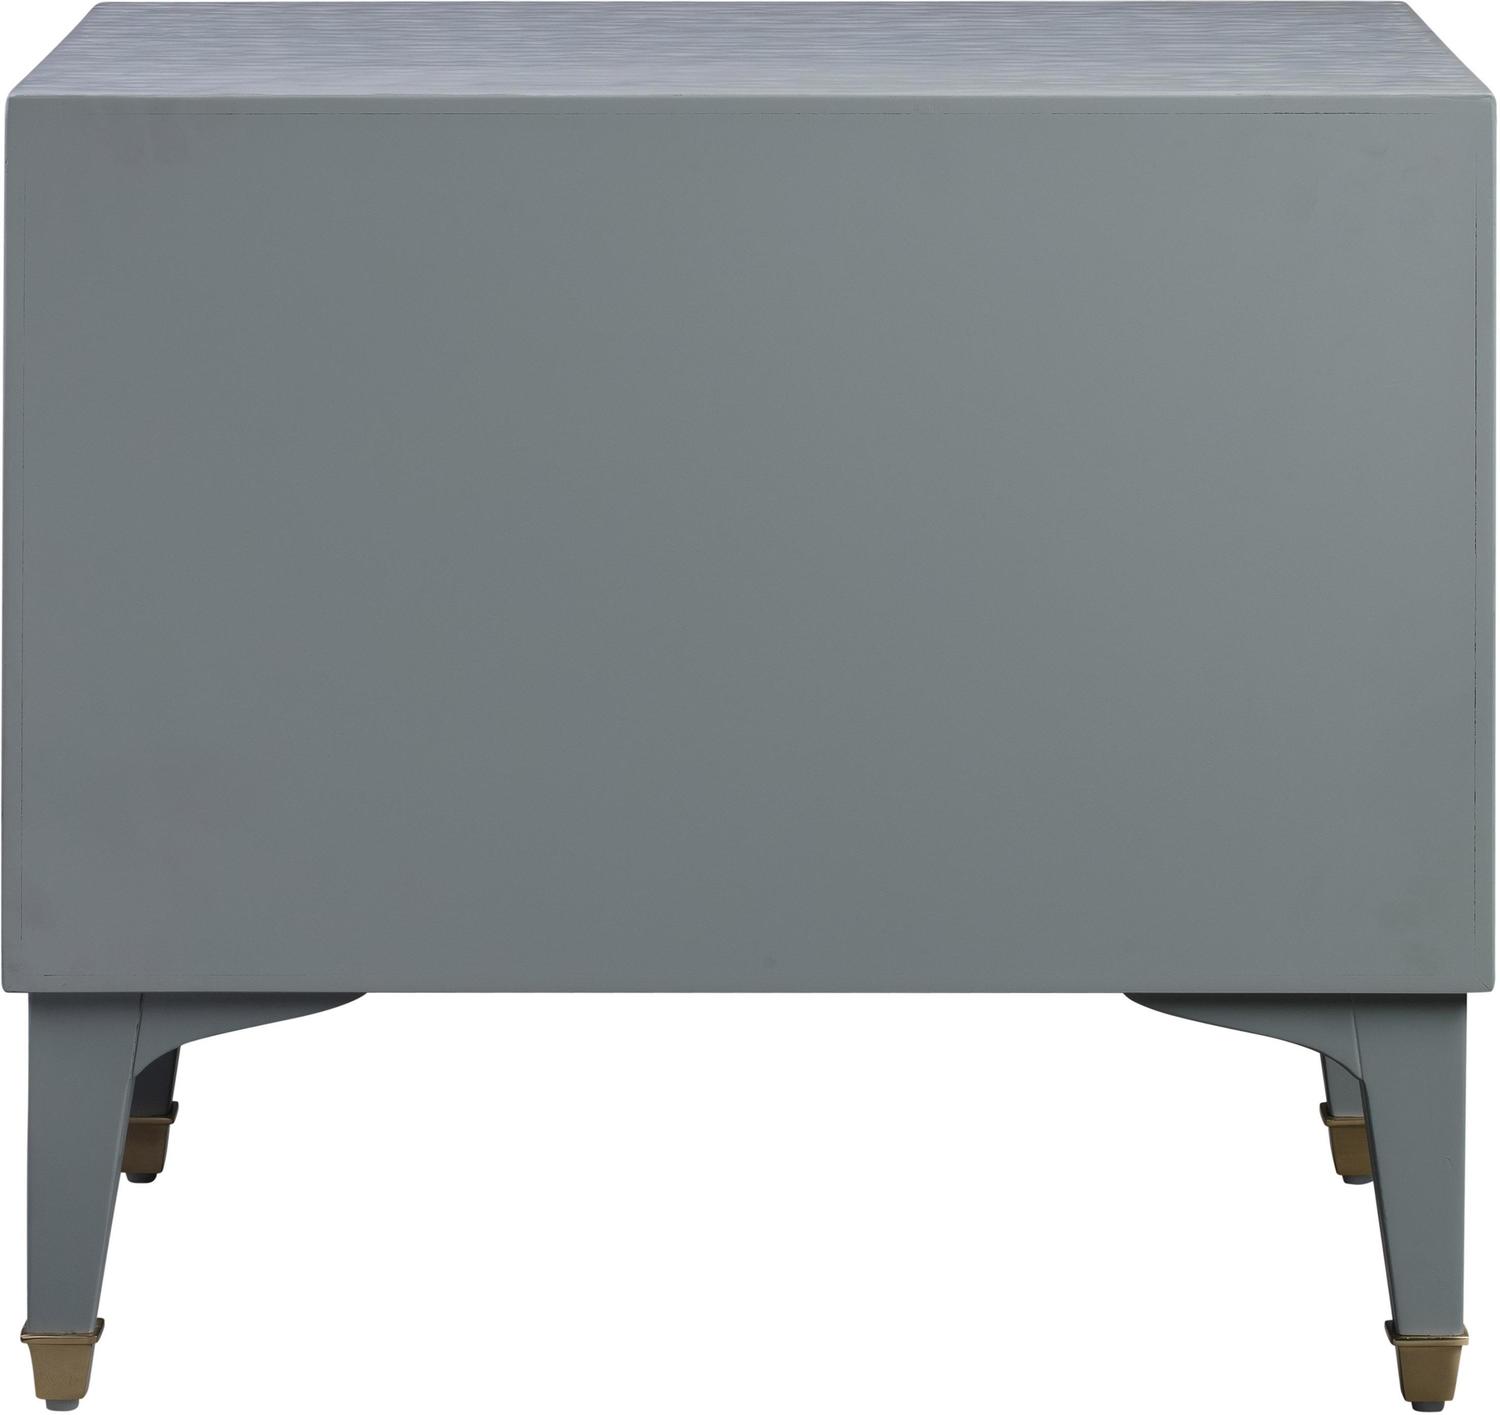 2 drawer modern nightstand Tov Furniture Nightstands Grey